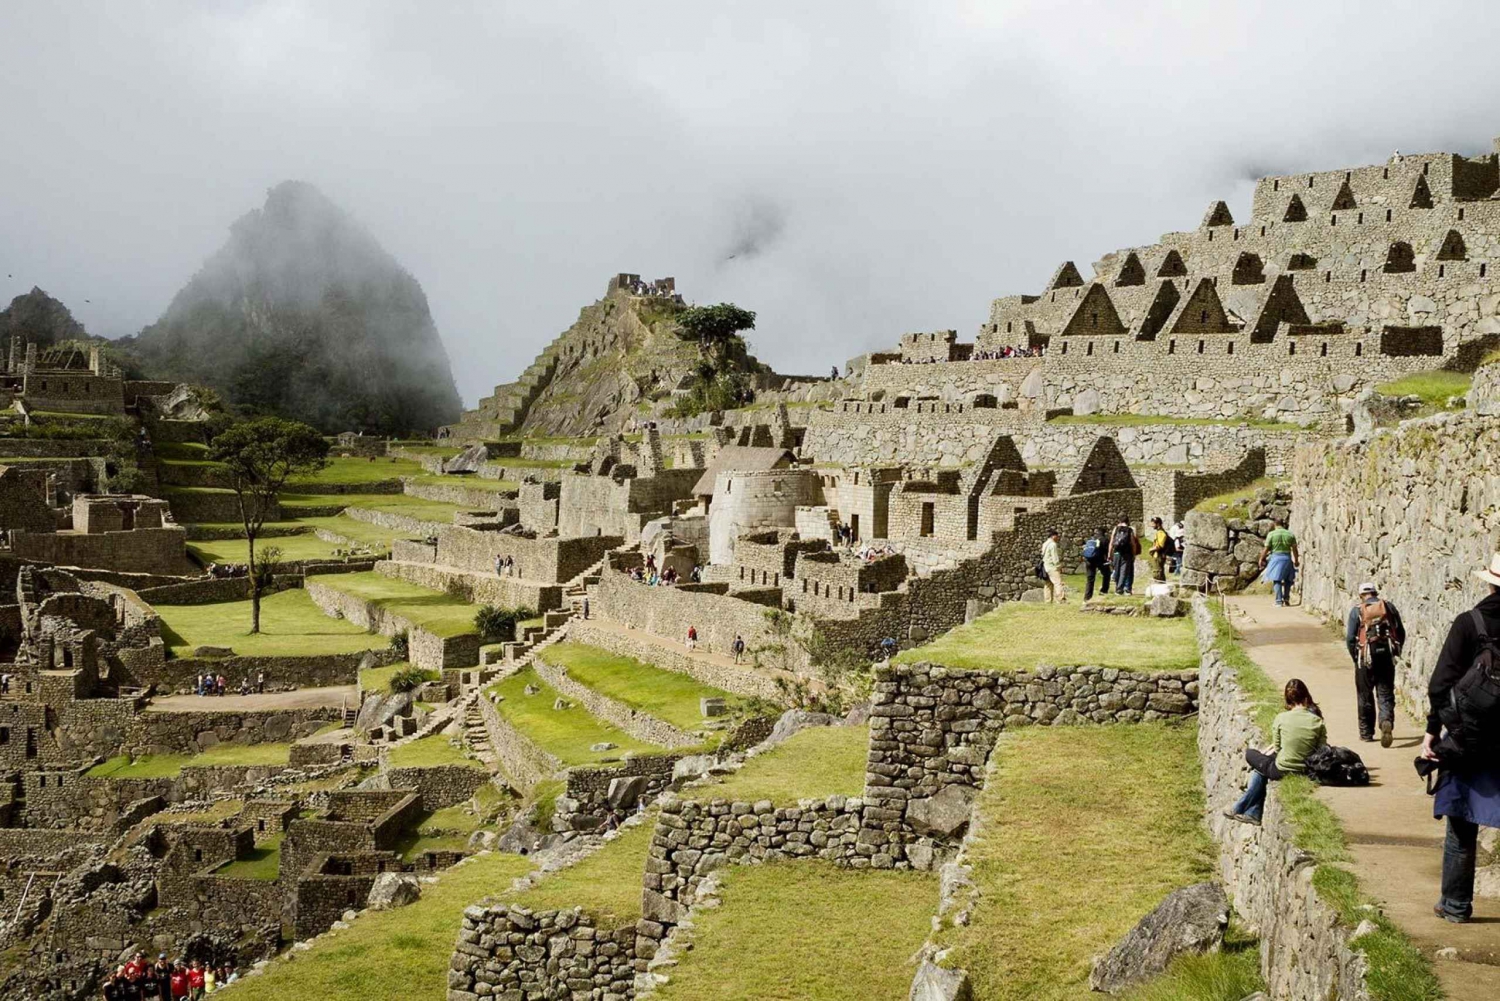 Dagvullende tour naar Machu Picchu met Expeditie- of Voyager-trein